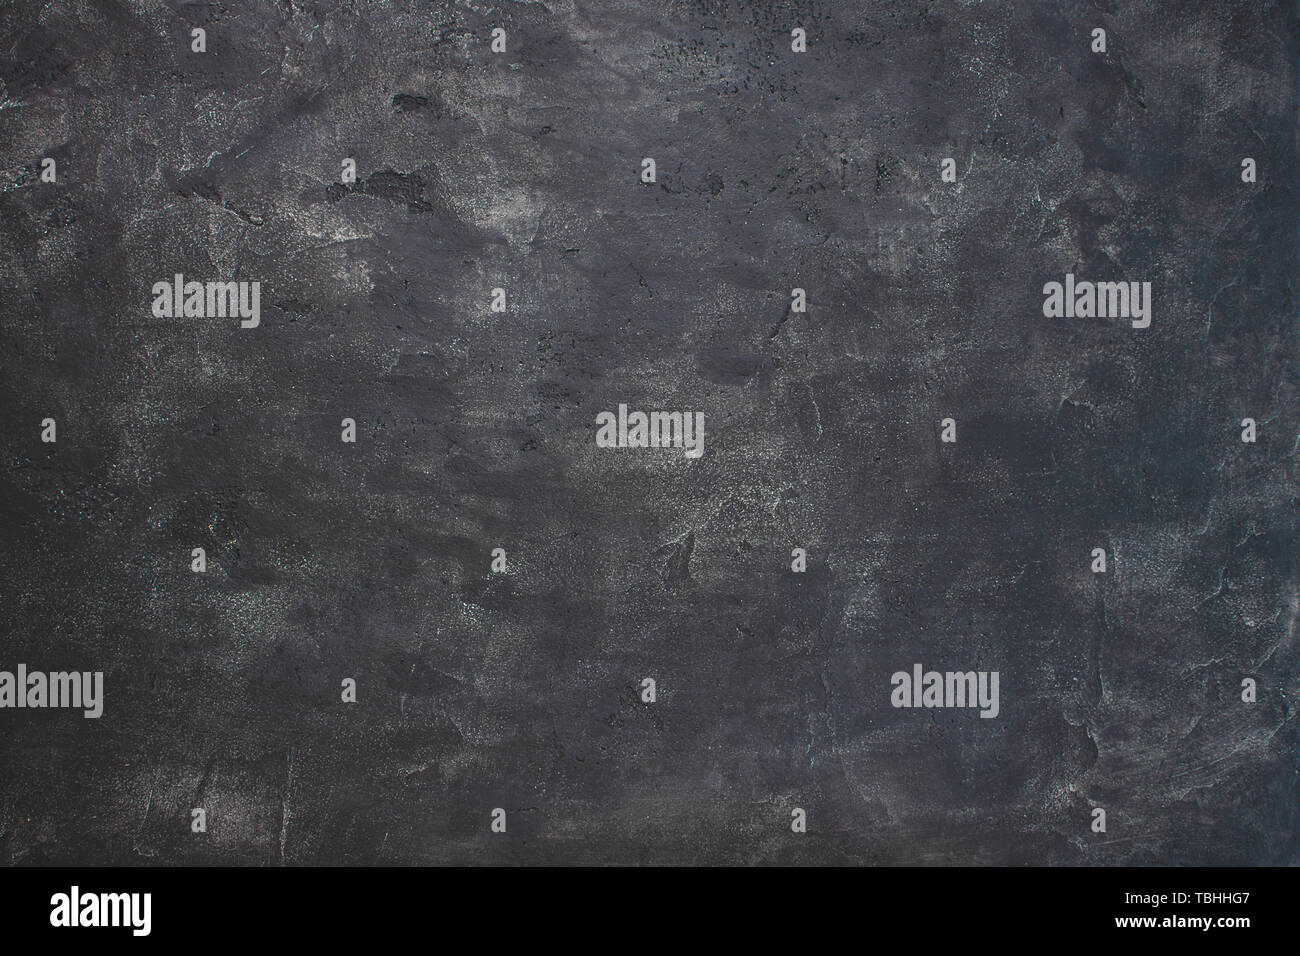 Dark Texture Background. Grunge Wall Backdrop. Stock Photo